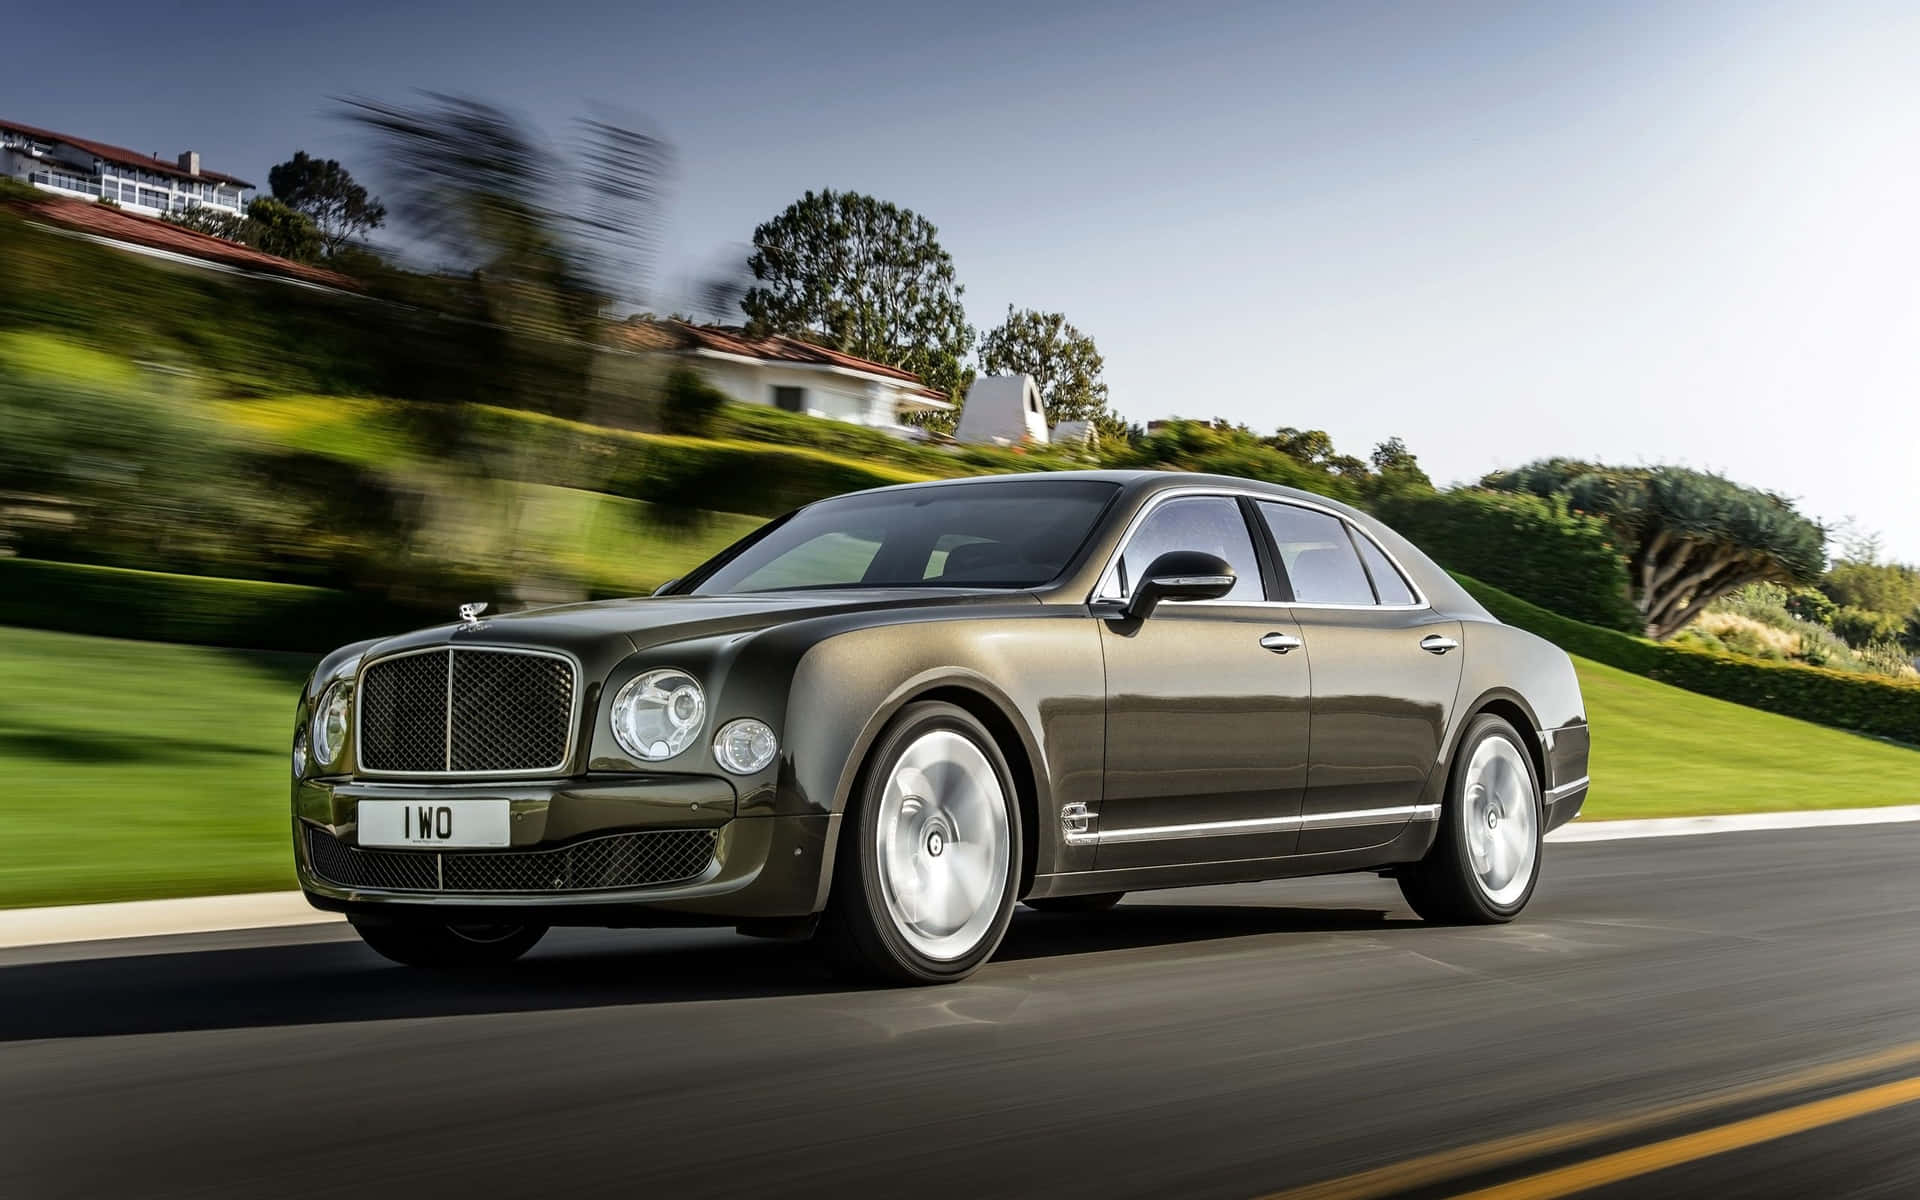 An Elegant View of the Bentley Luxury Vehicle